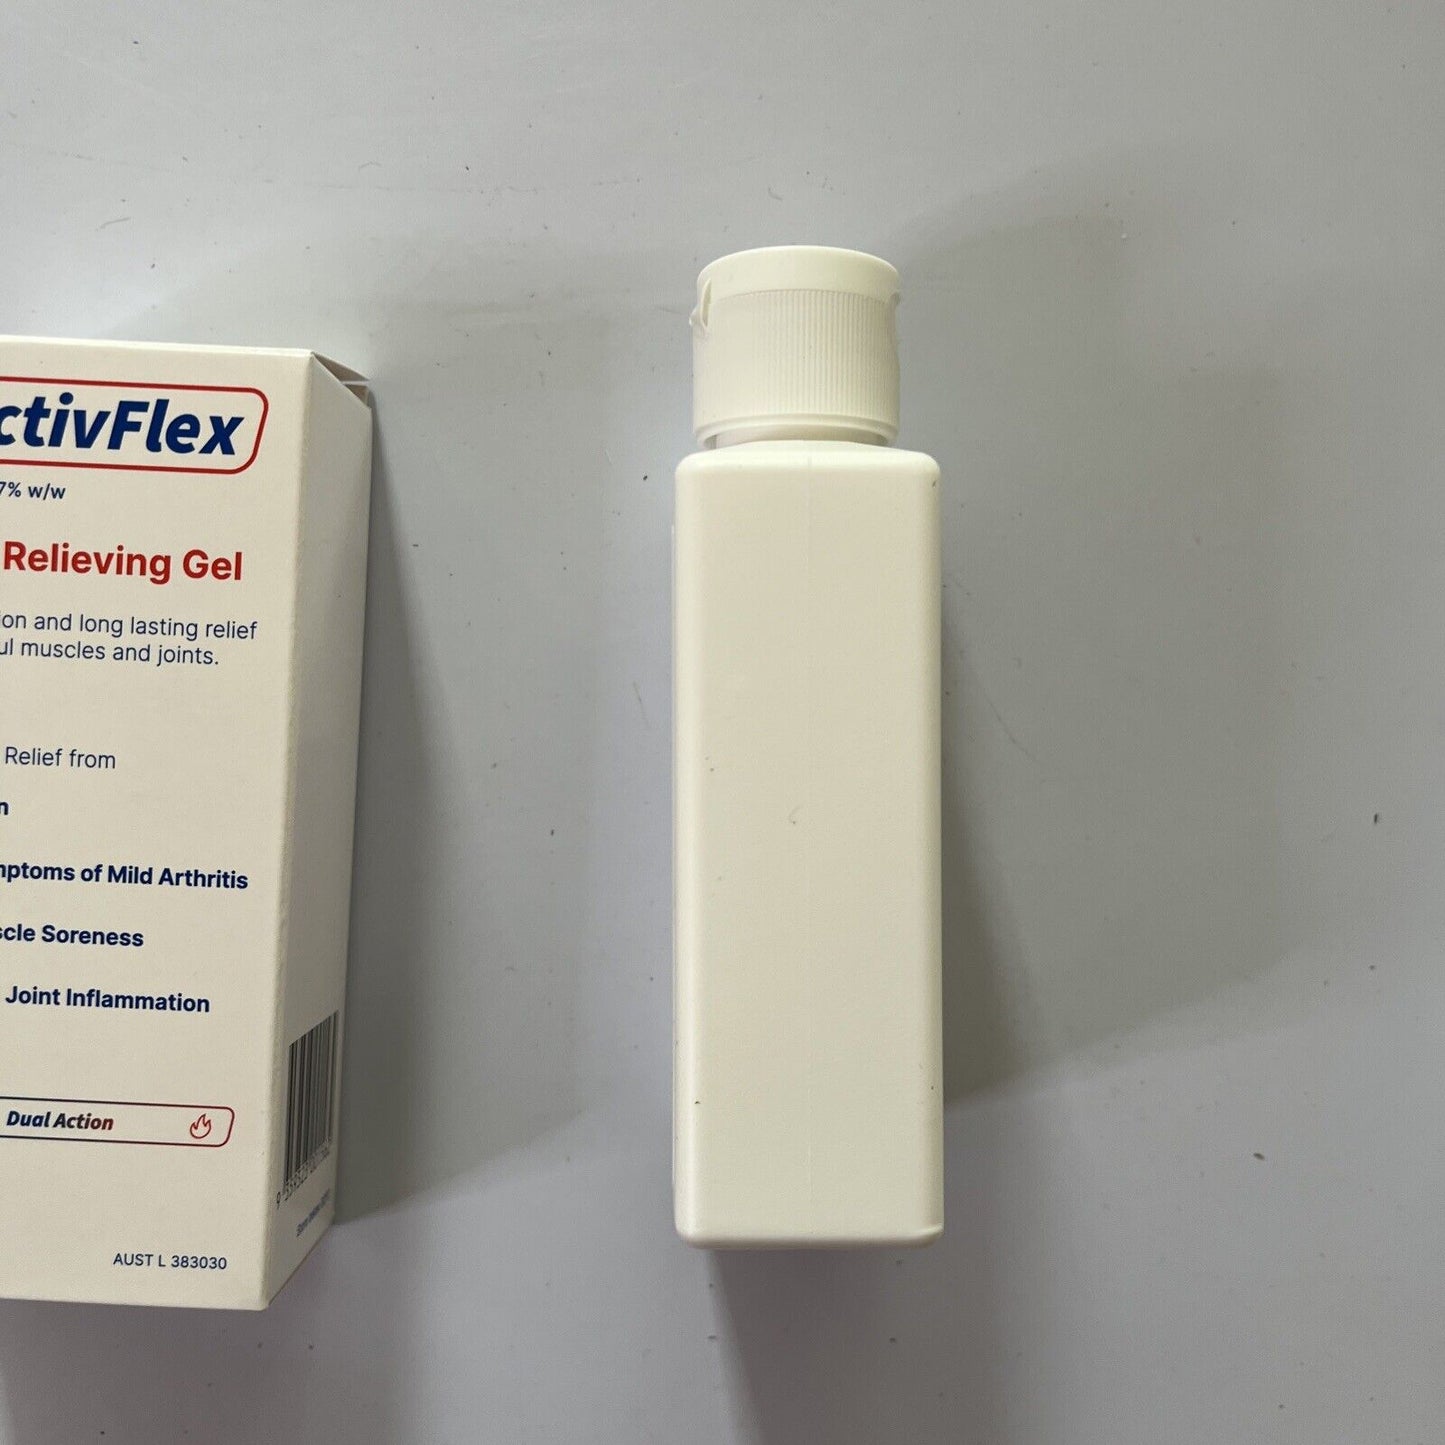 ActivFlex Pain Relieving Gel 125ml (Flexall 454 Alternative) Menthol 7%